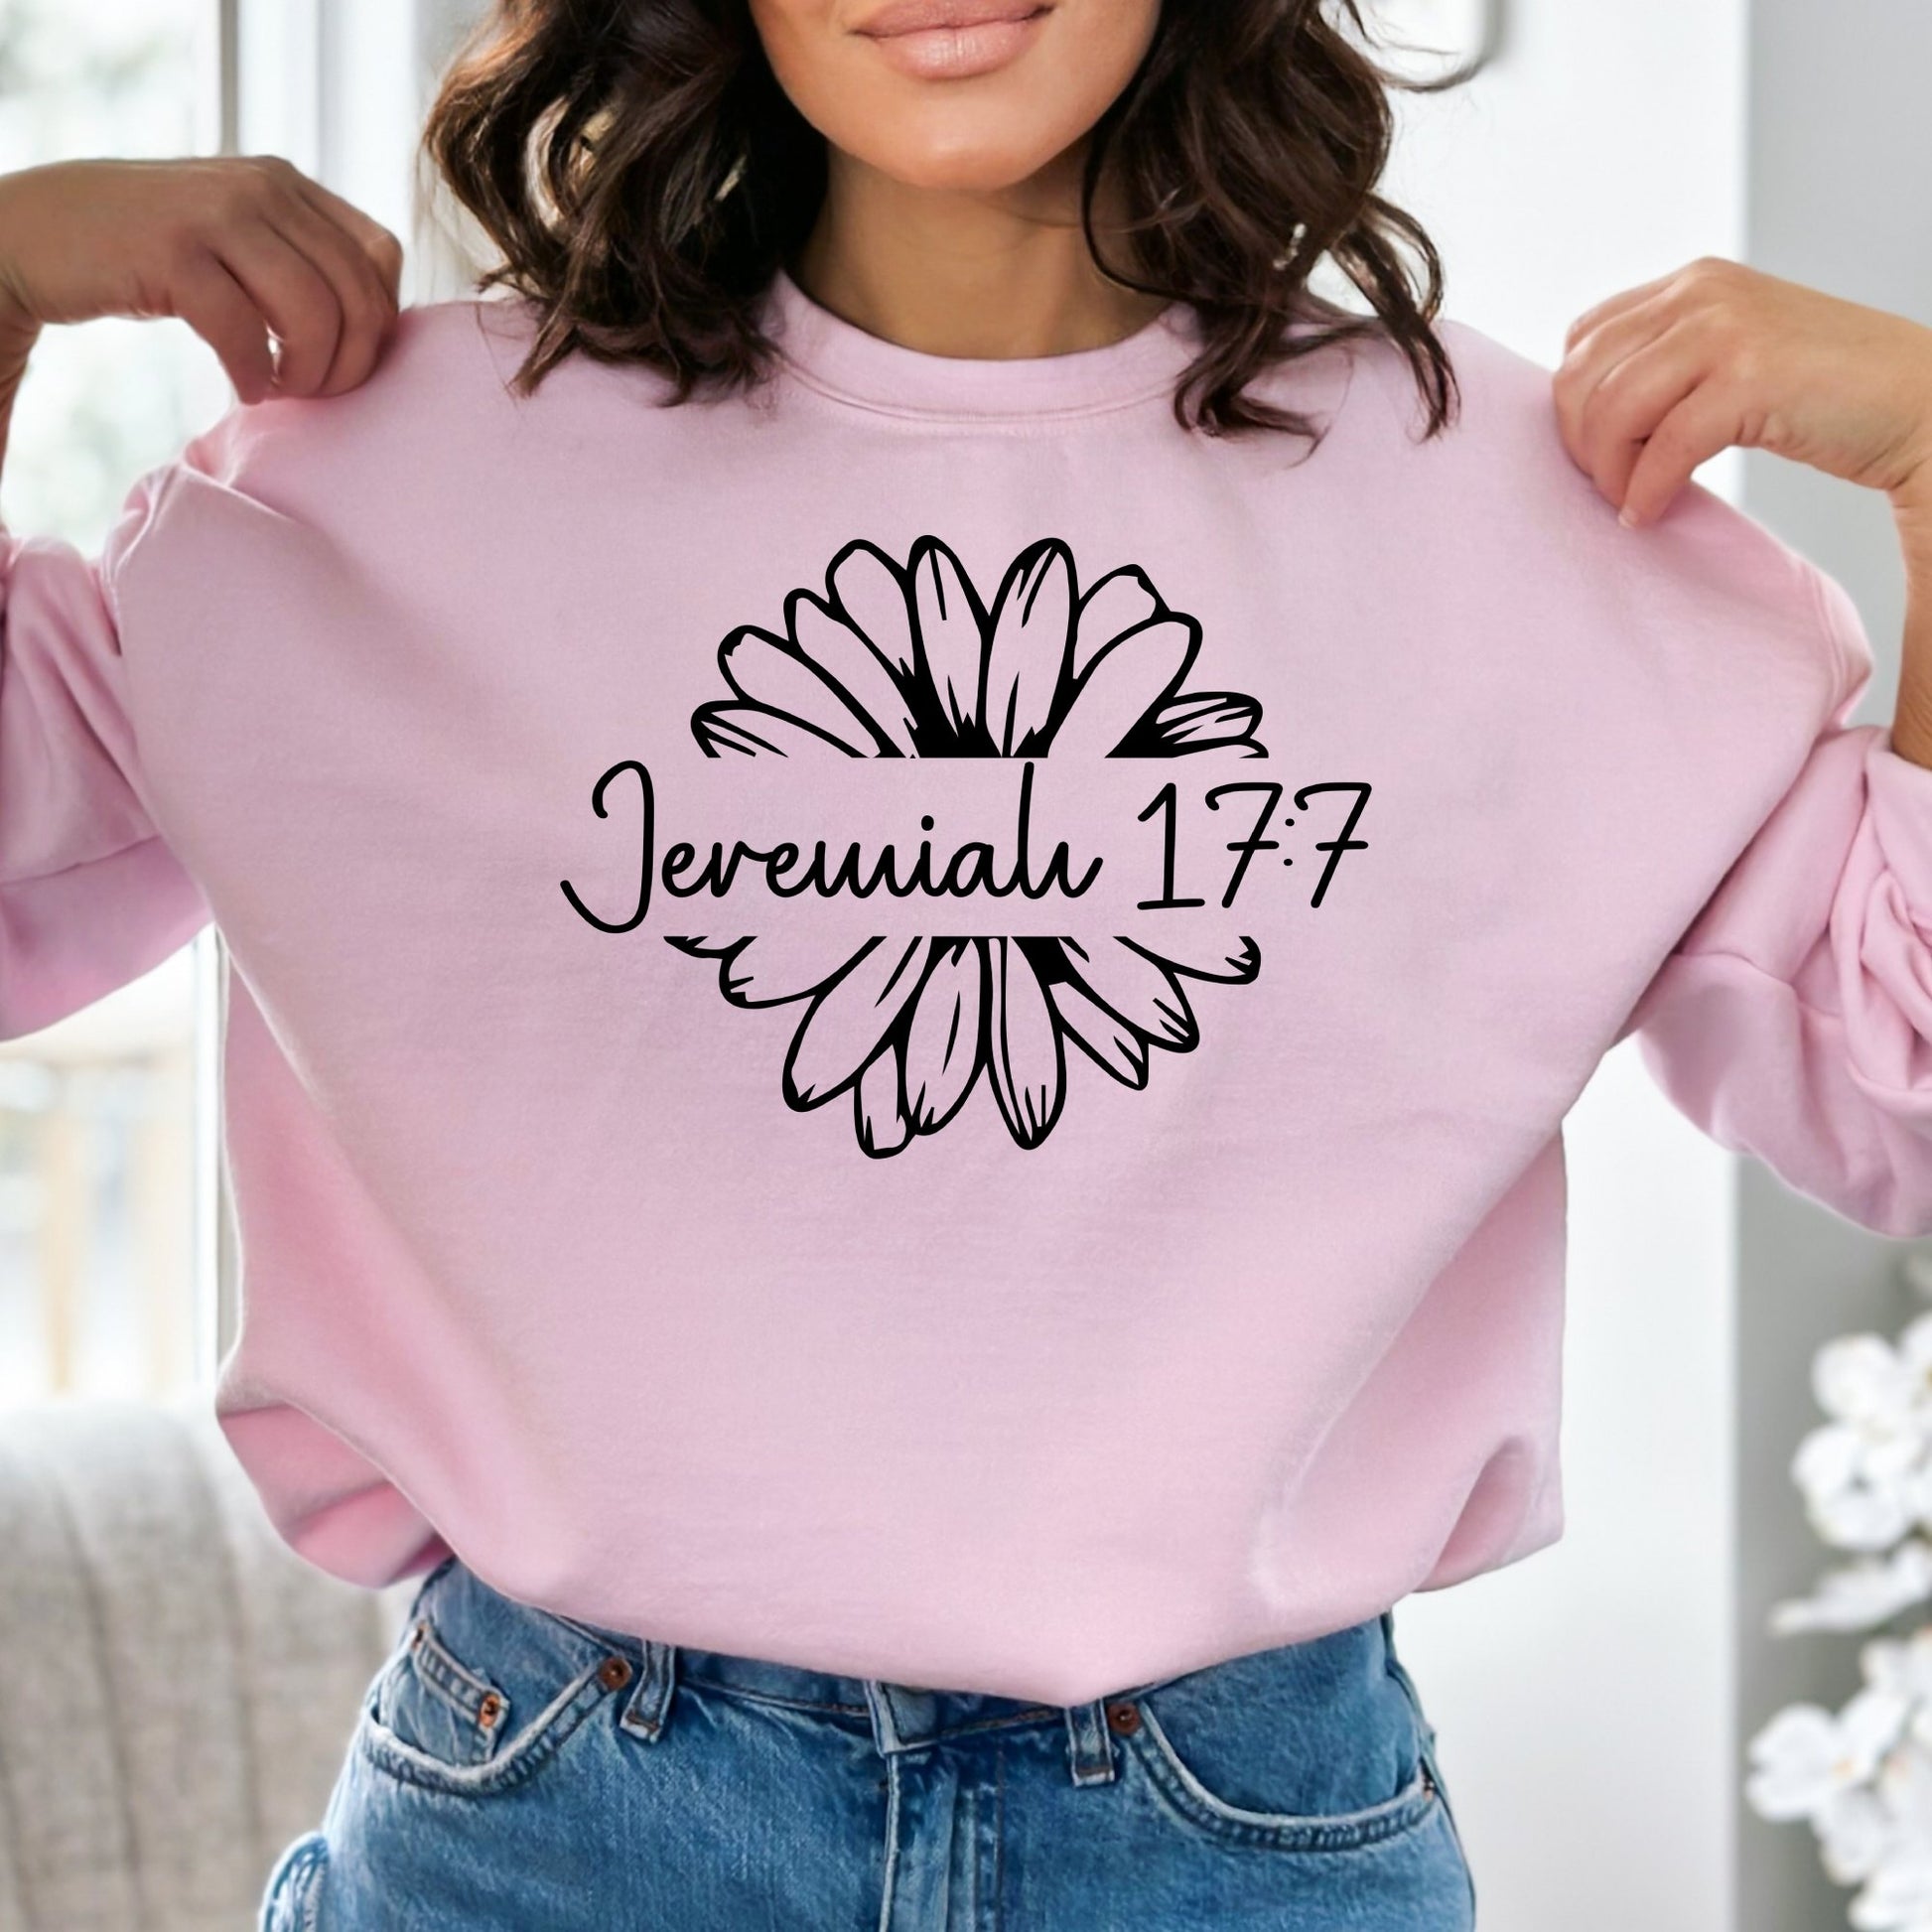 Unisex Jeremiah 17:7 Floral Sweatshirt, Christian Scripture Sweater, Bible Verse Pullover, Casual Spiritual Clothing, Faith-Based Top - Mardonyx Sweatshirt